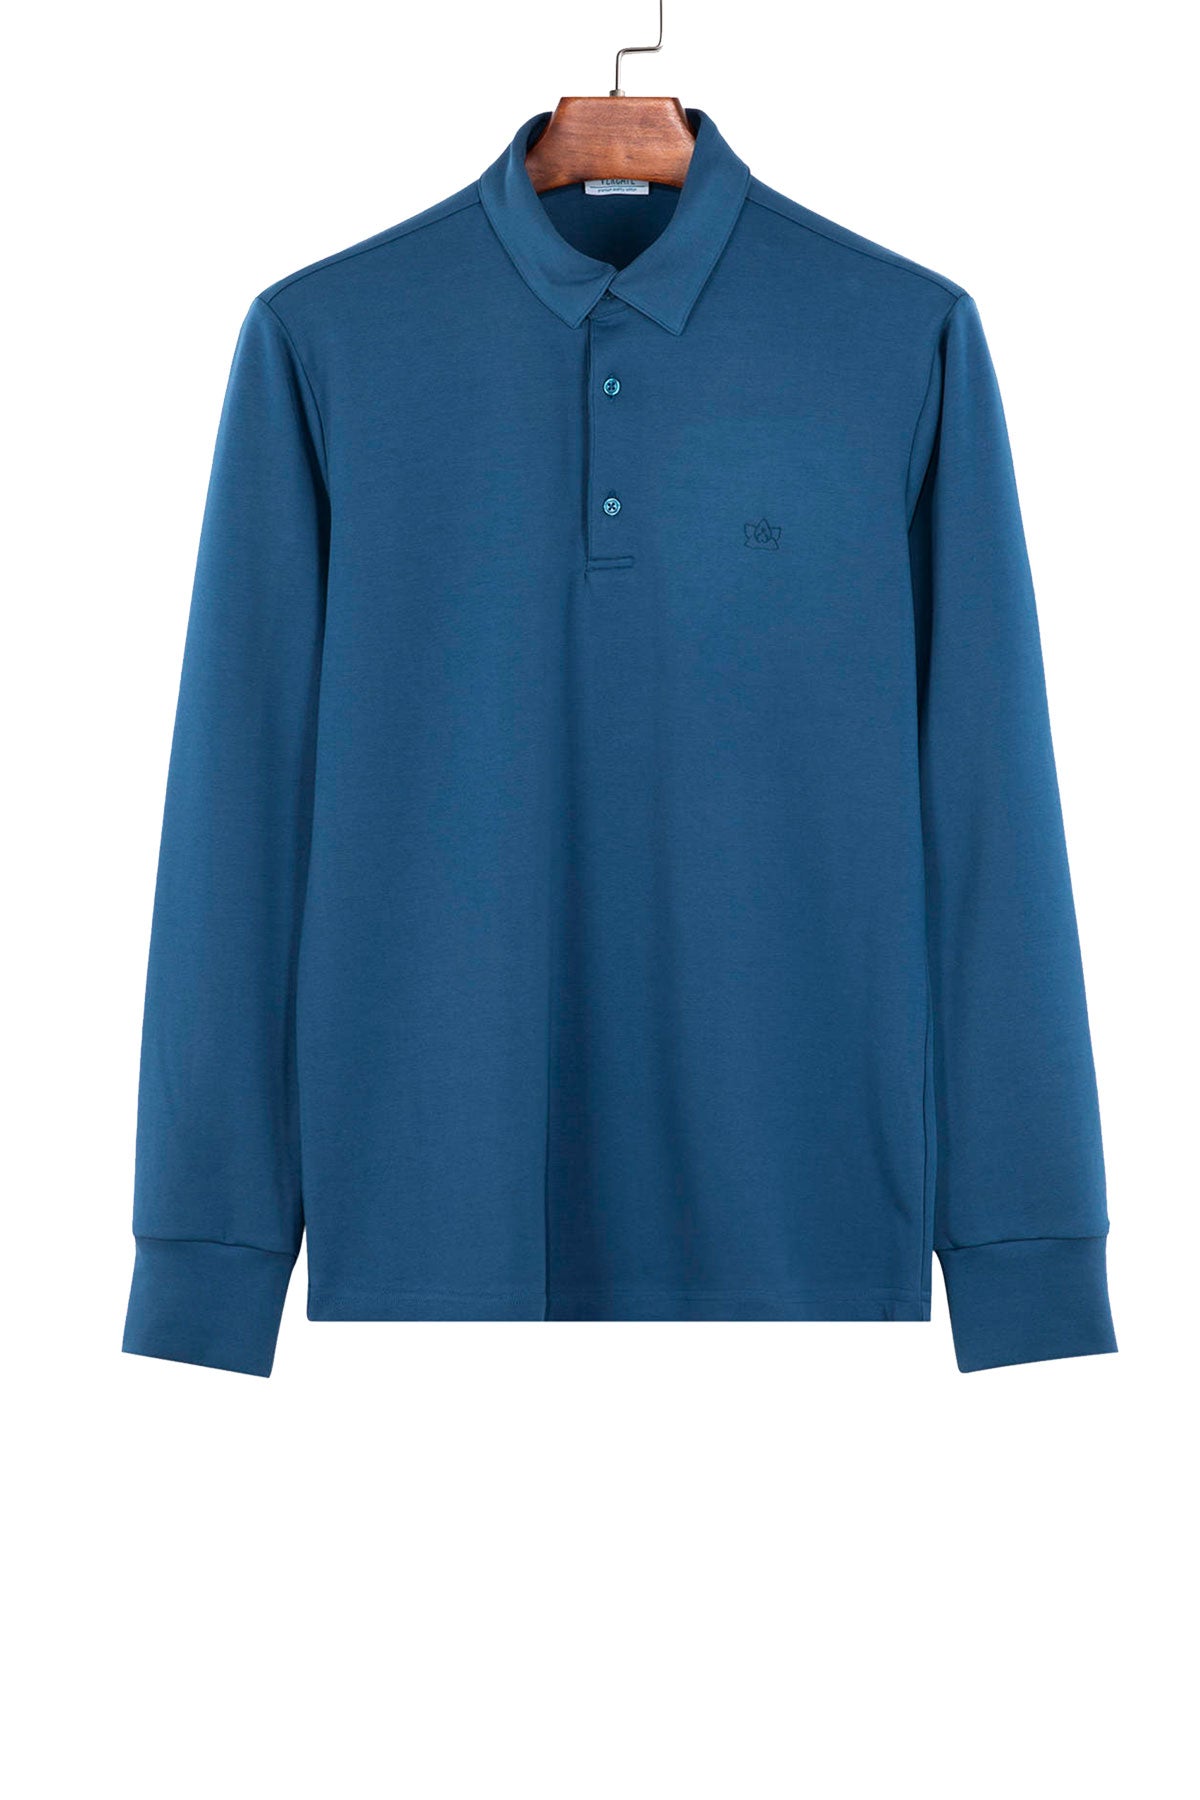 Strijkvrij Poloshirt - Royal Blue - Polo - Vercate - Vercate - Overhemden - Strijkvrije overhemden - Heren - herenkleding